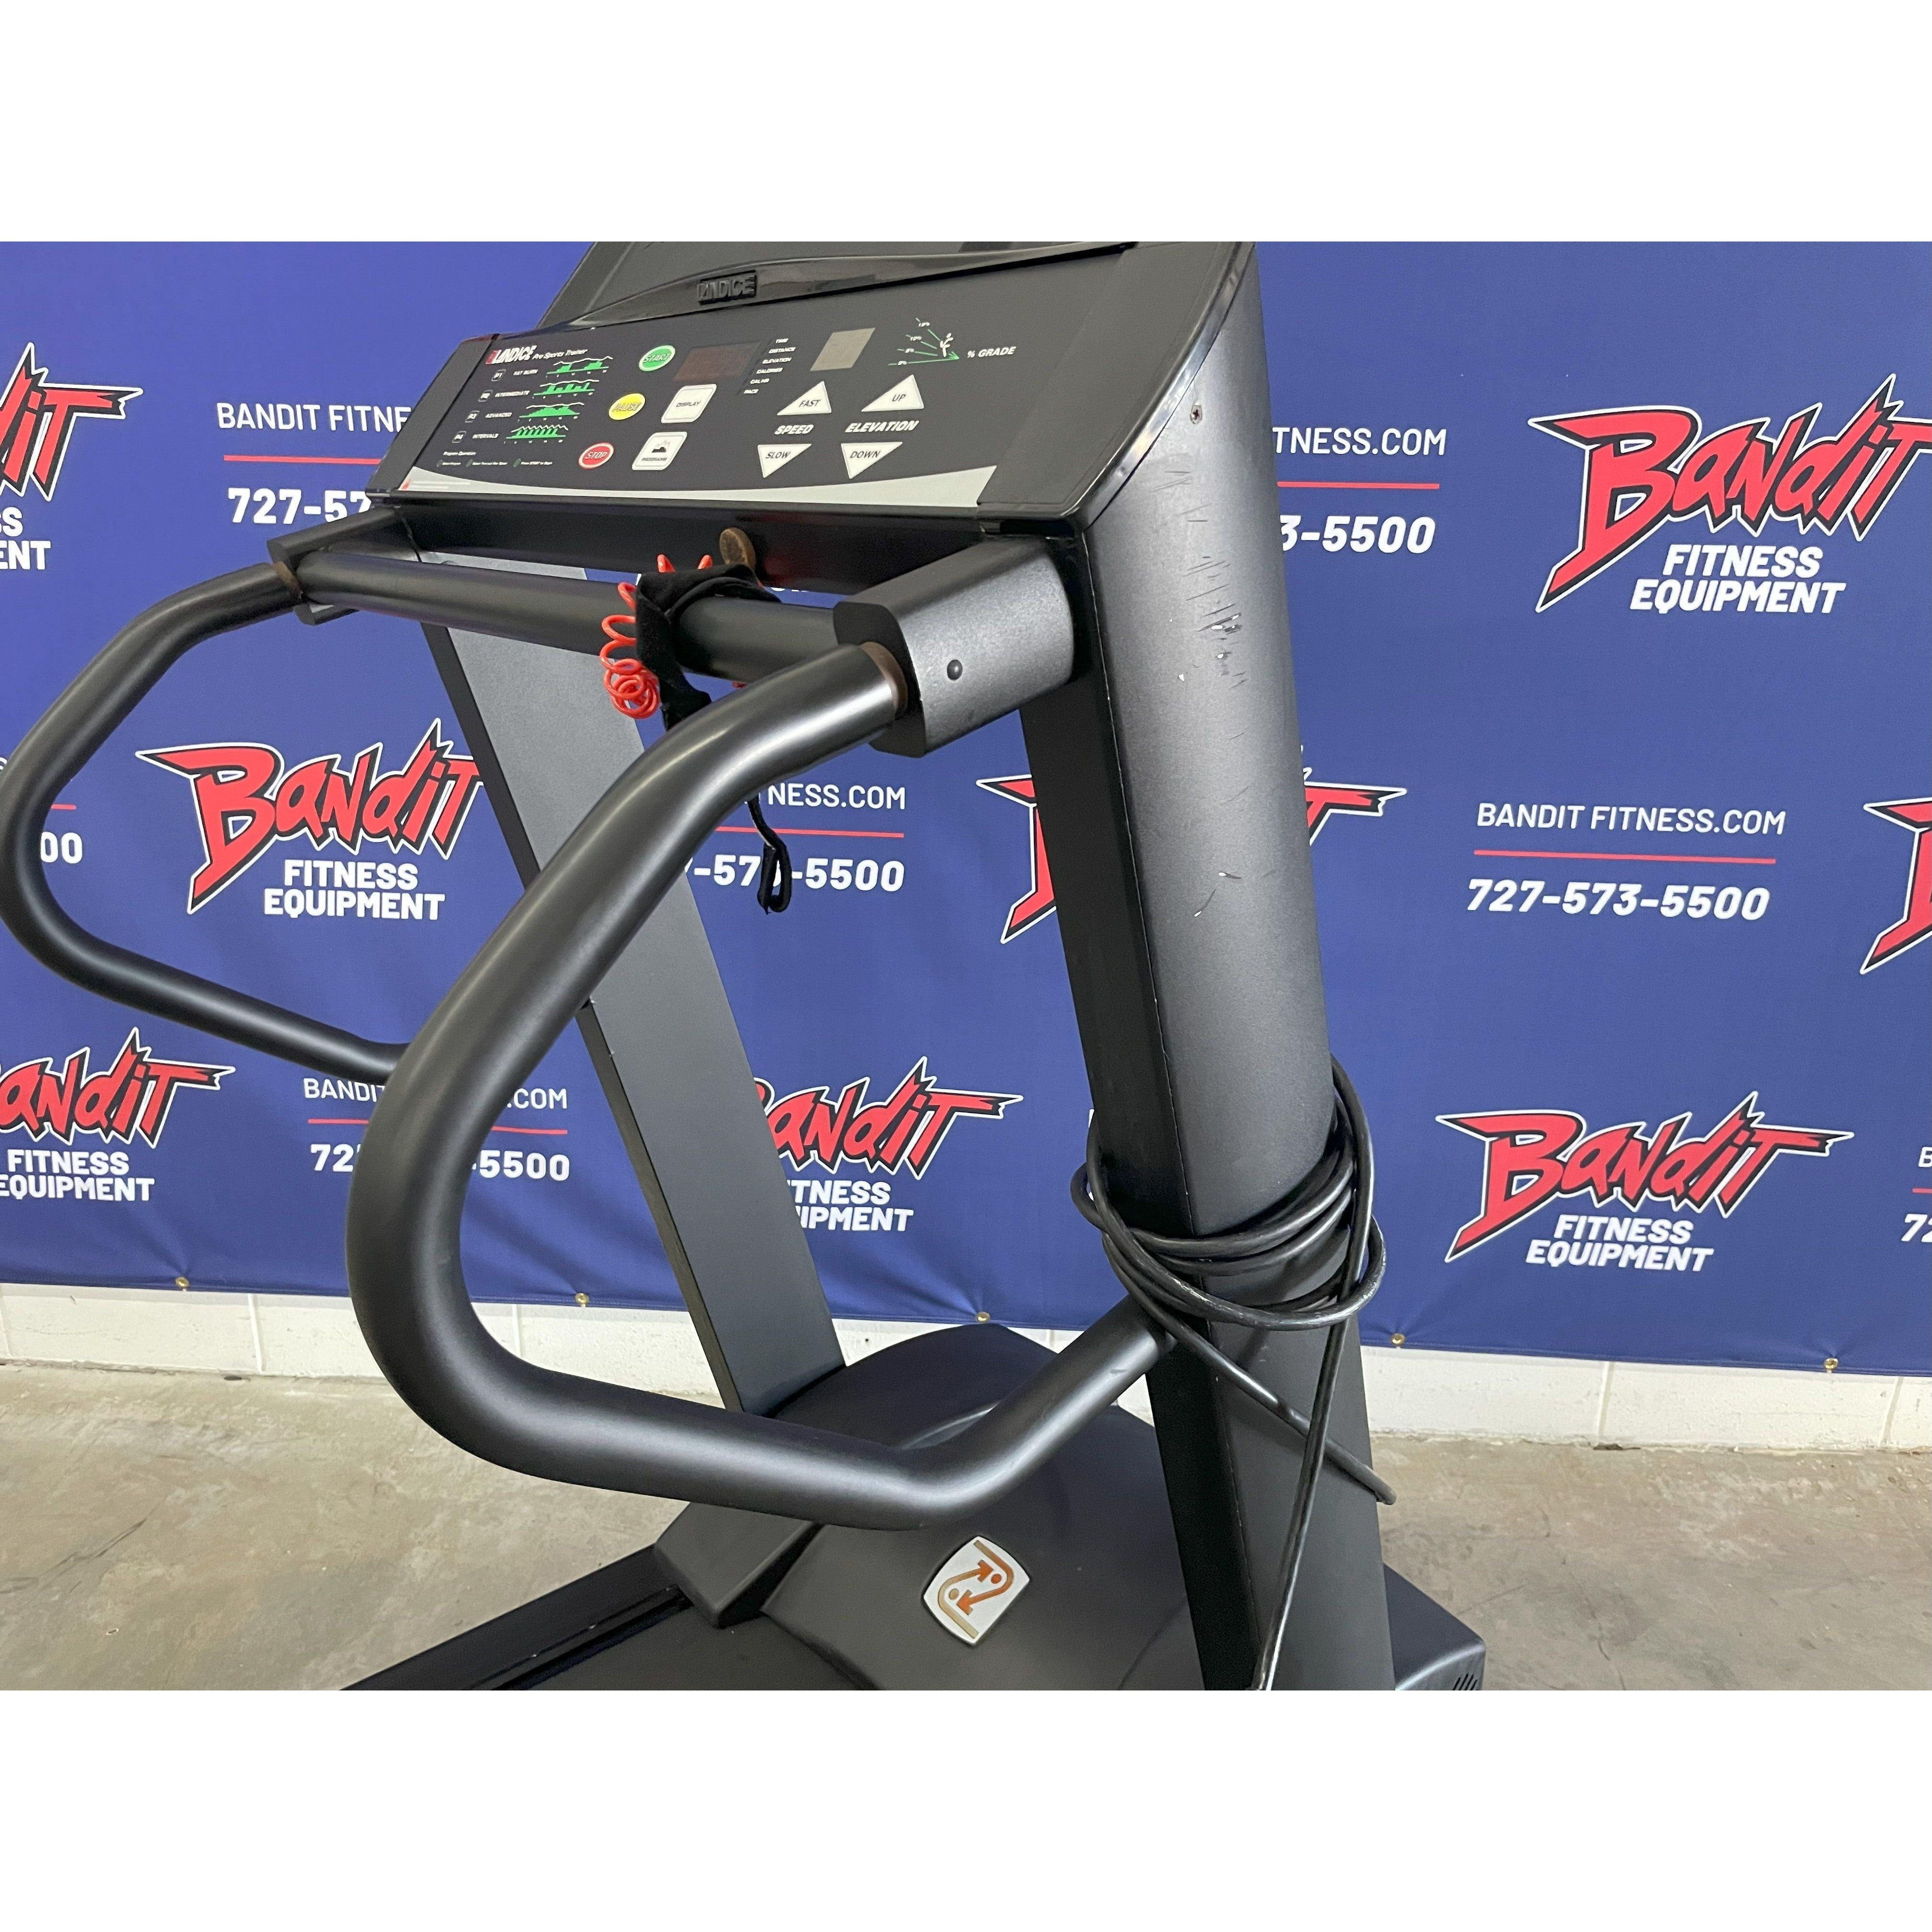 Used Landice L7 Pro Sports Trainer Treadmill